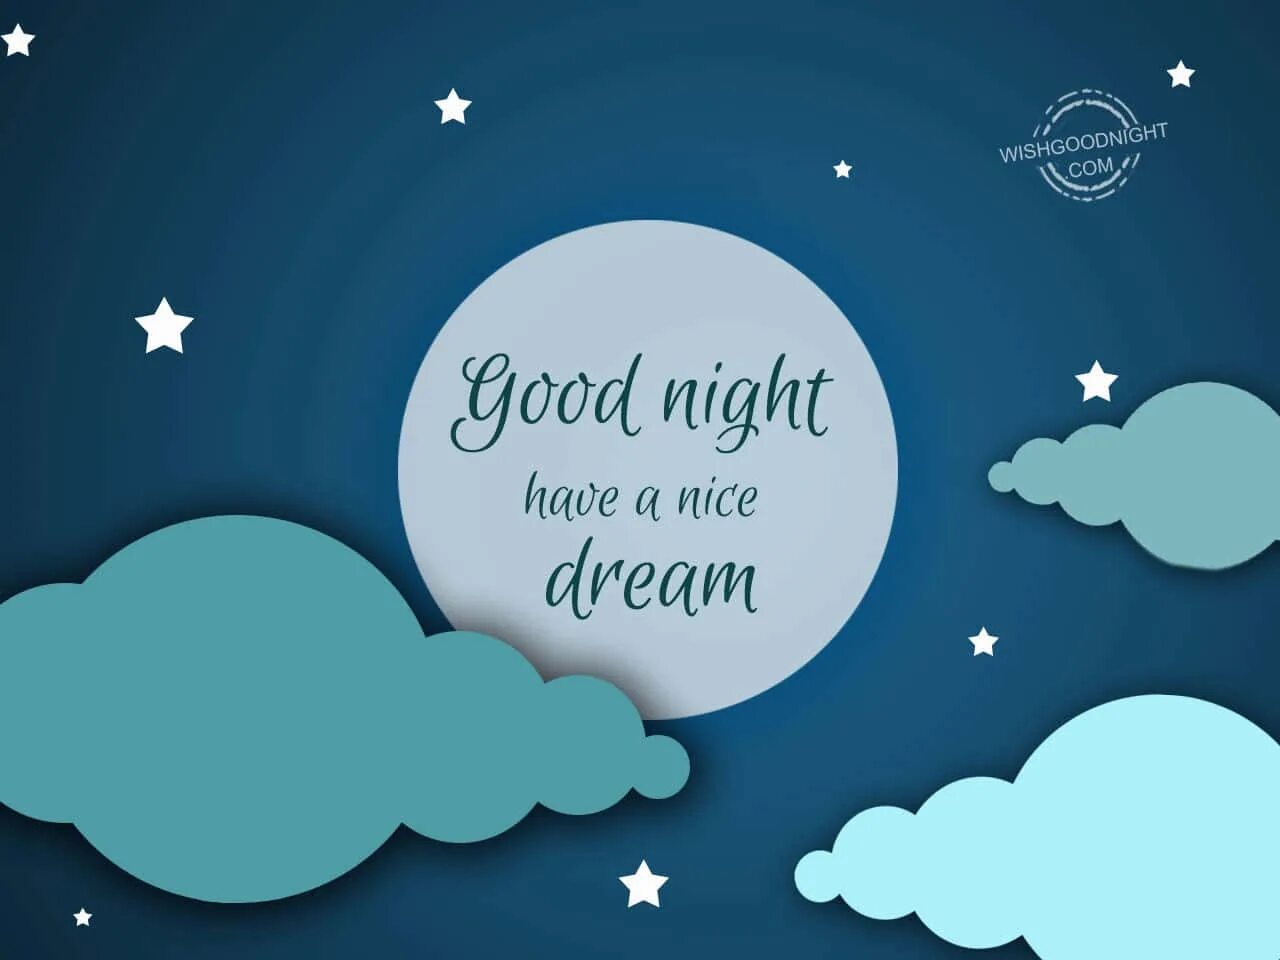 Have good dreams. Good Night картинки. Доброй ночи картинки. Good Night картинки красивые на английском. Have a good Night красивые.